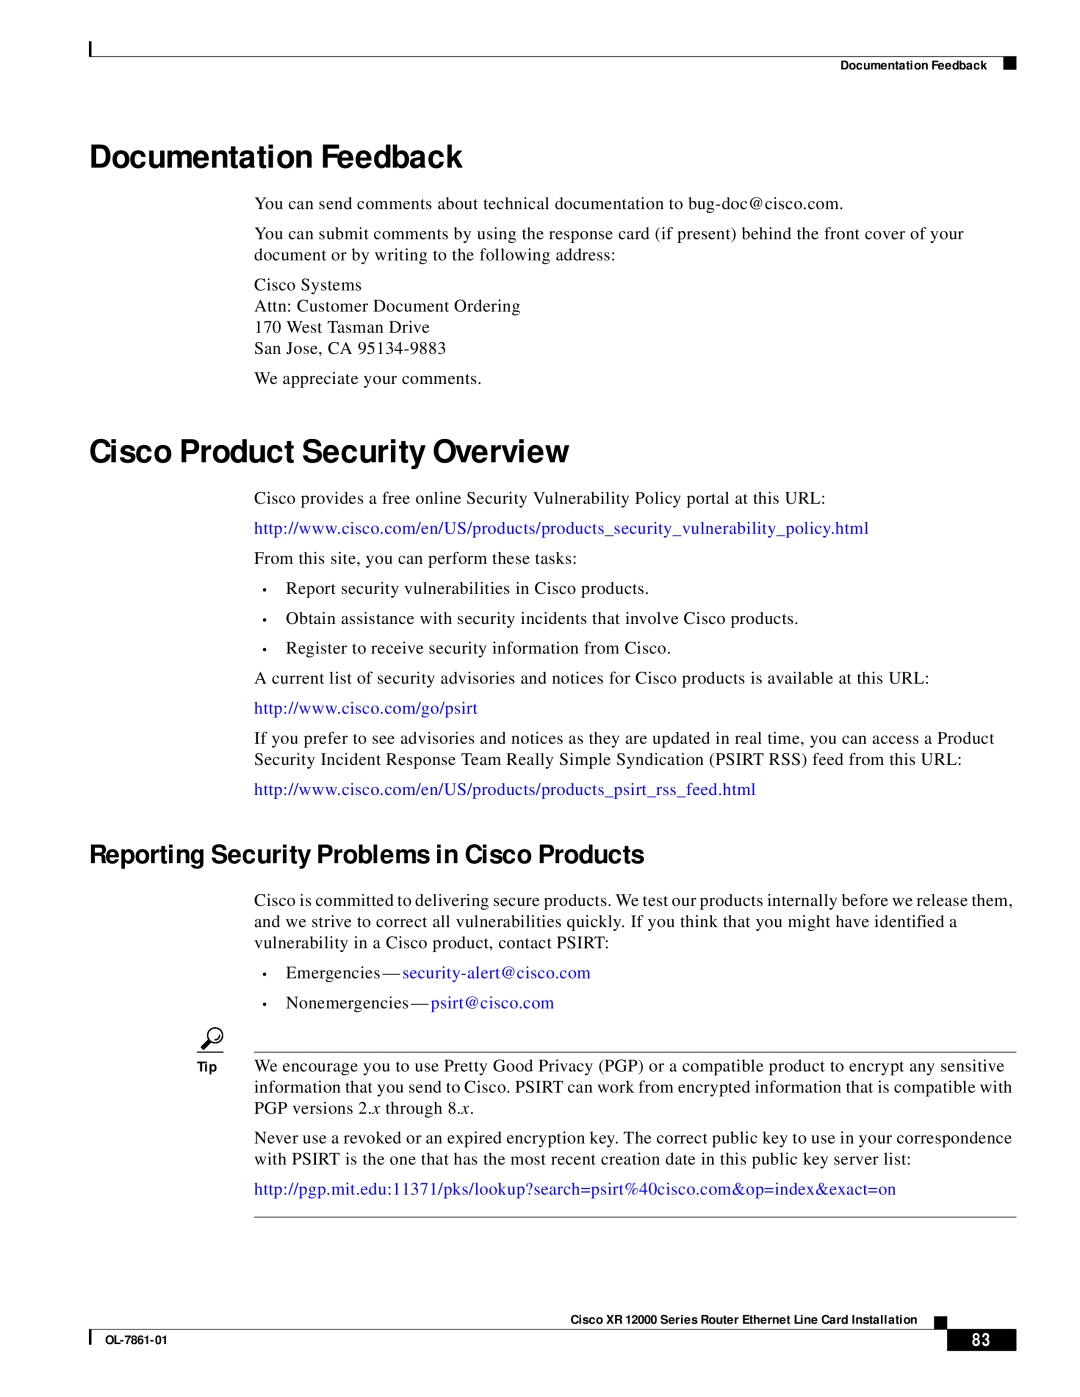 Cisco Systems OL-7861-01 Documentation Feedback, Cisco Product Security Overview, Emergencies - security-alert@cisco.com 